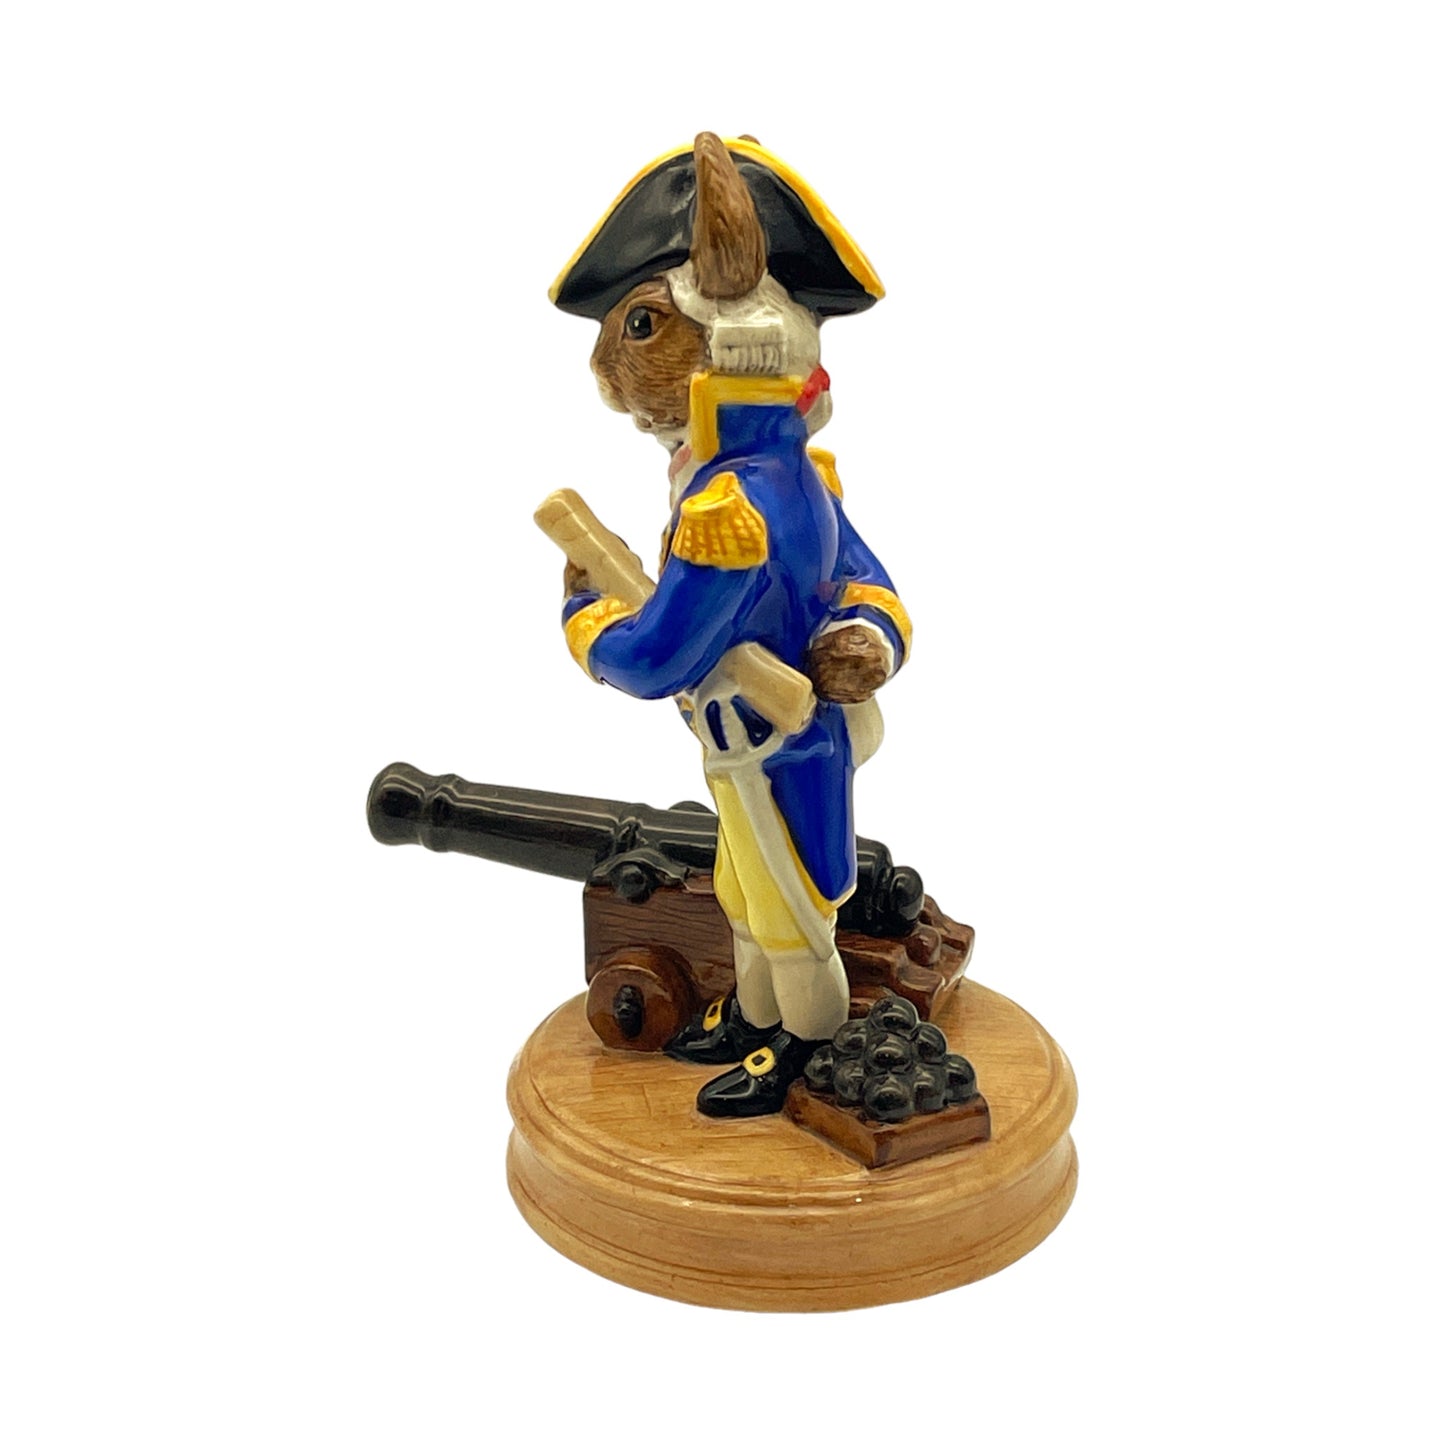 Royal Doulton Bunnykins - The Shipmates Collection Captain - Hand Made & Decorated - 2003  - 5"